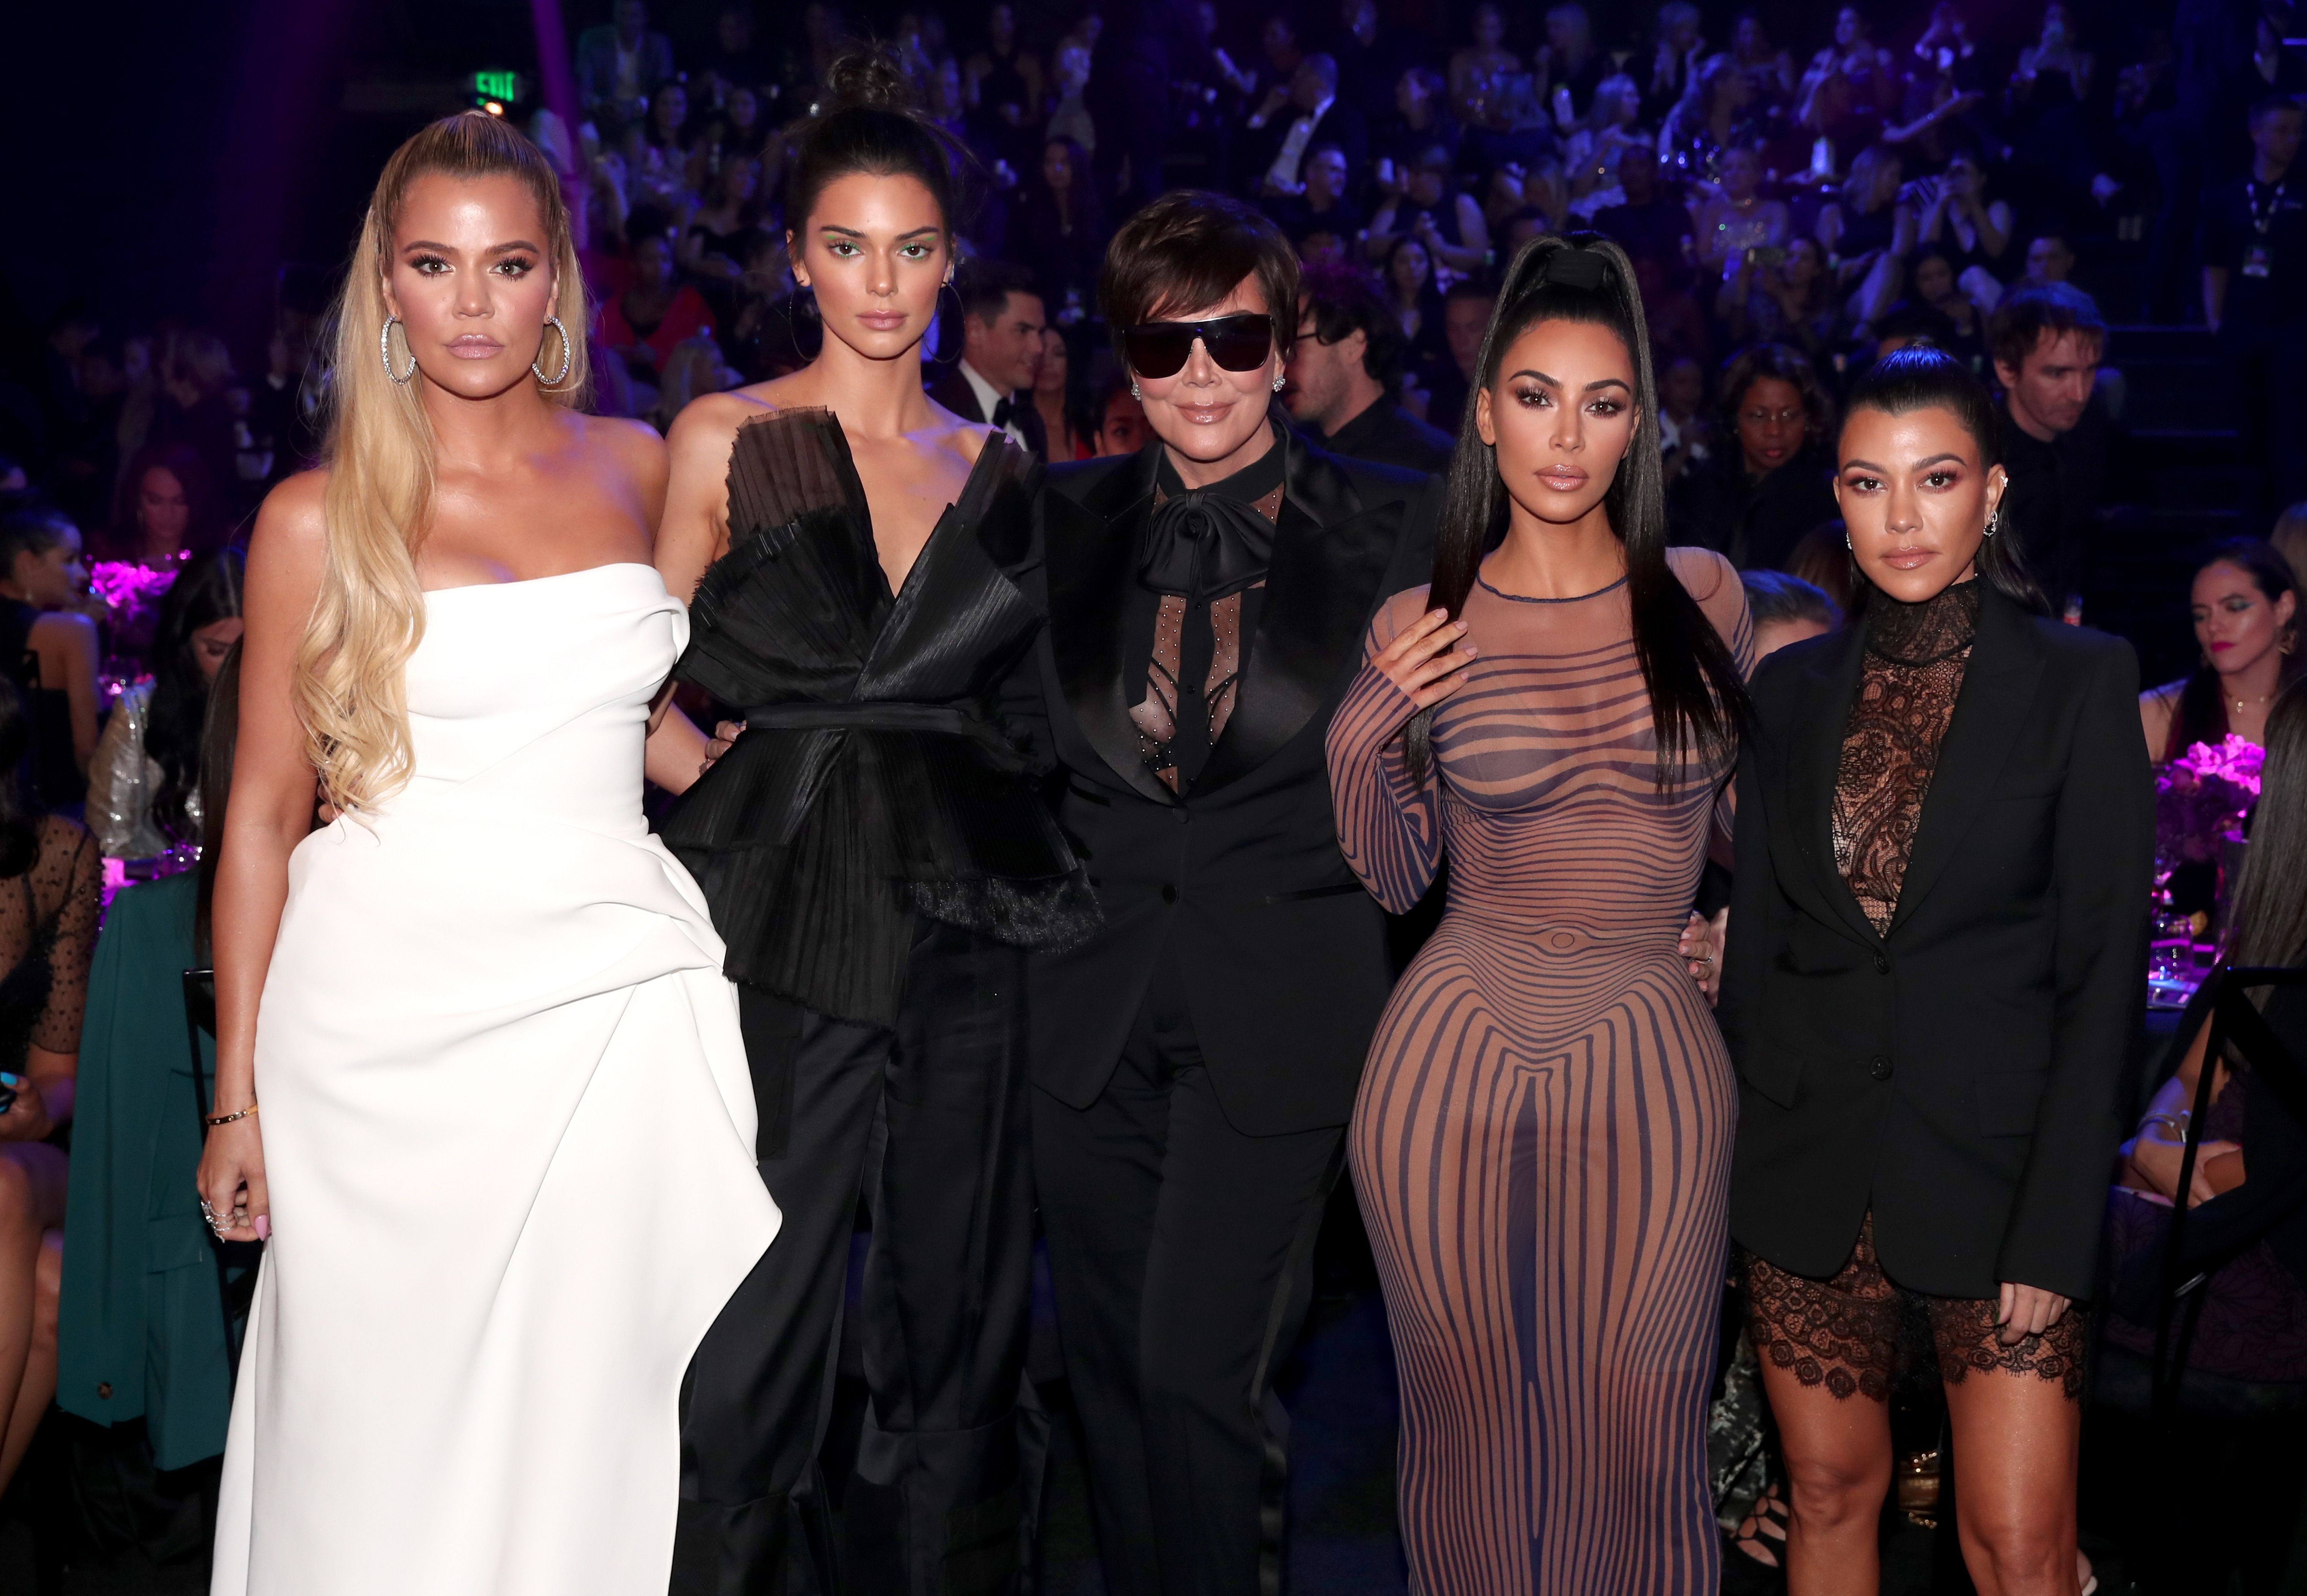 Khloe Kardashian, Kendall Jenner, Kris Jenner, Kim Kardashian and Kourtney Kardashian attend the 2018 E! People's Choice Awards at the Barker Hangar on November 11, 2018. | Source: Getty Images